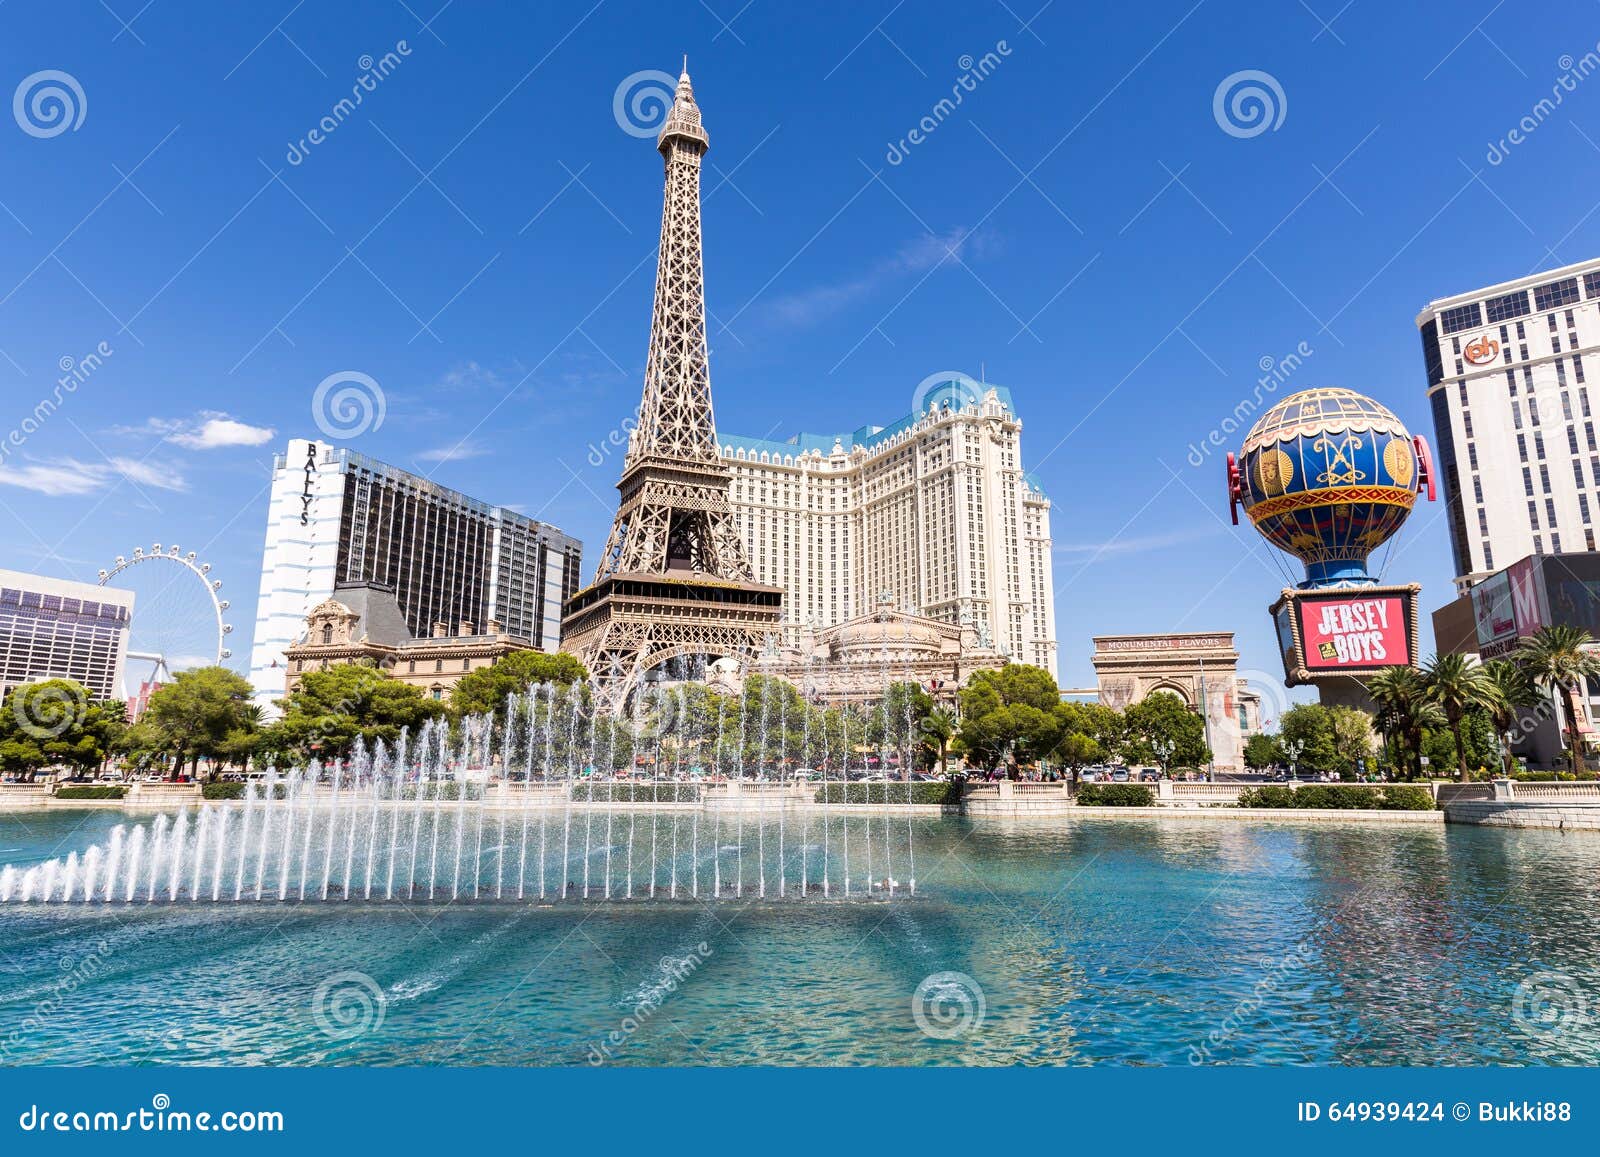 View Of The Paris Las Vegas Hotel And Casino In Las Vegas Usa